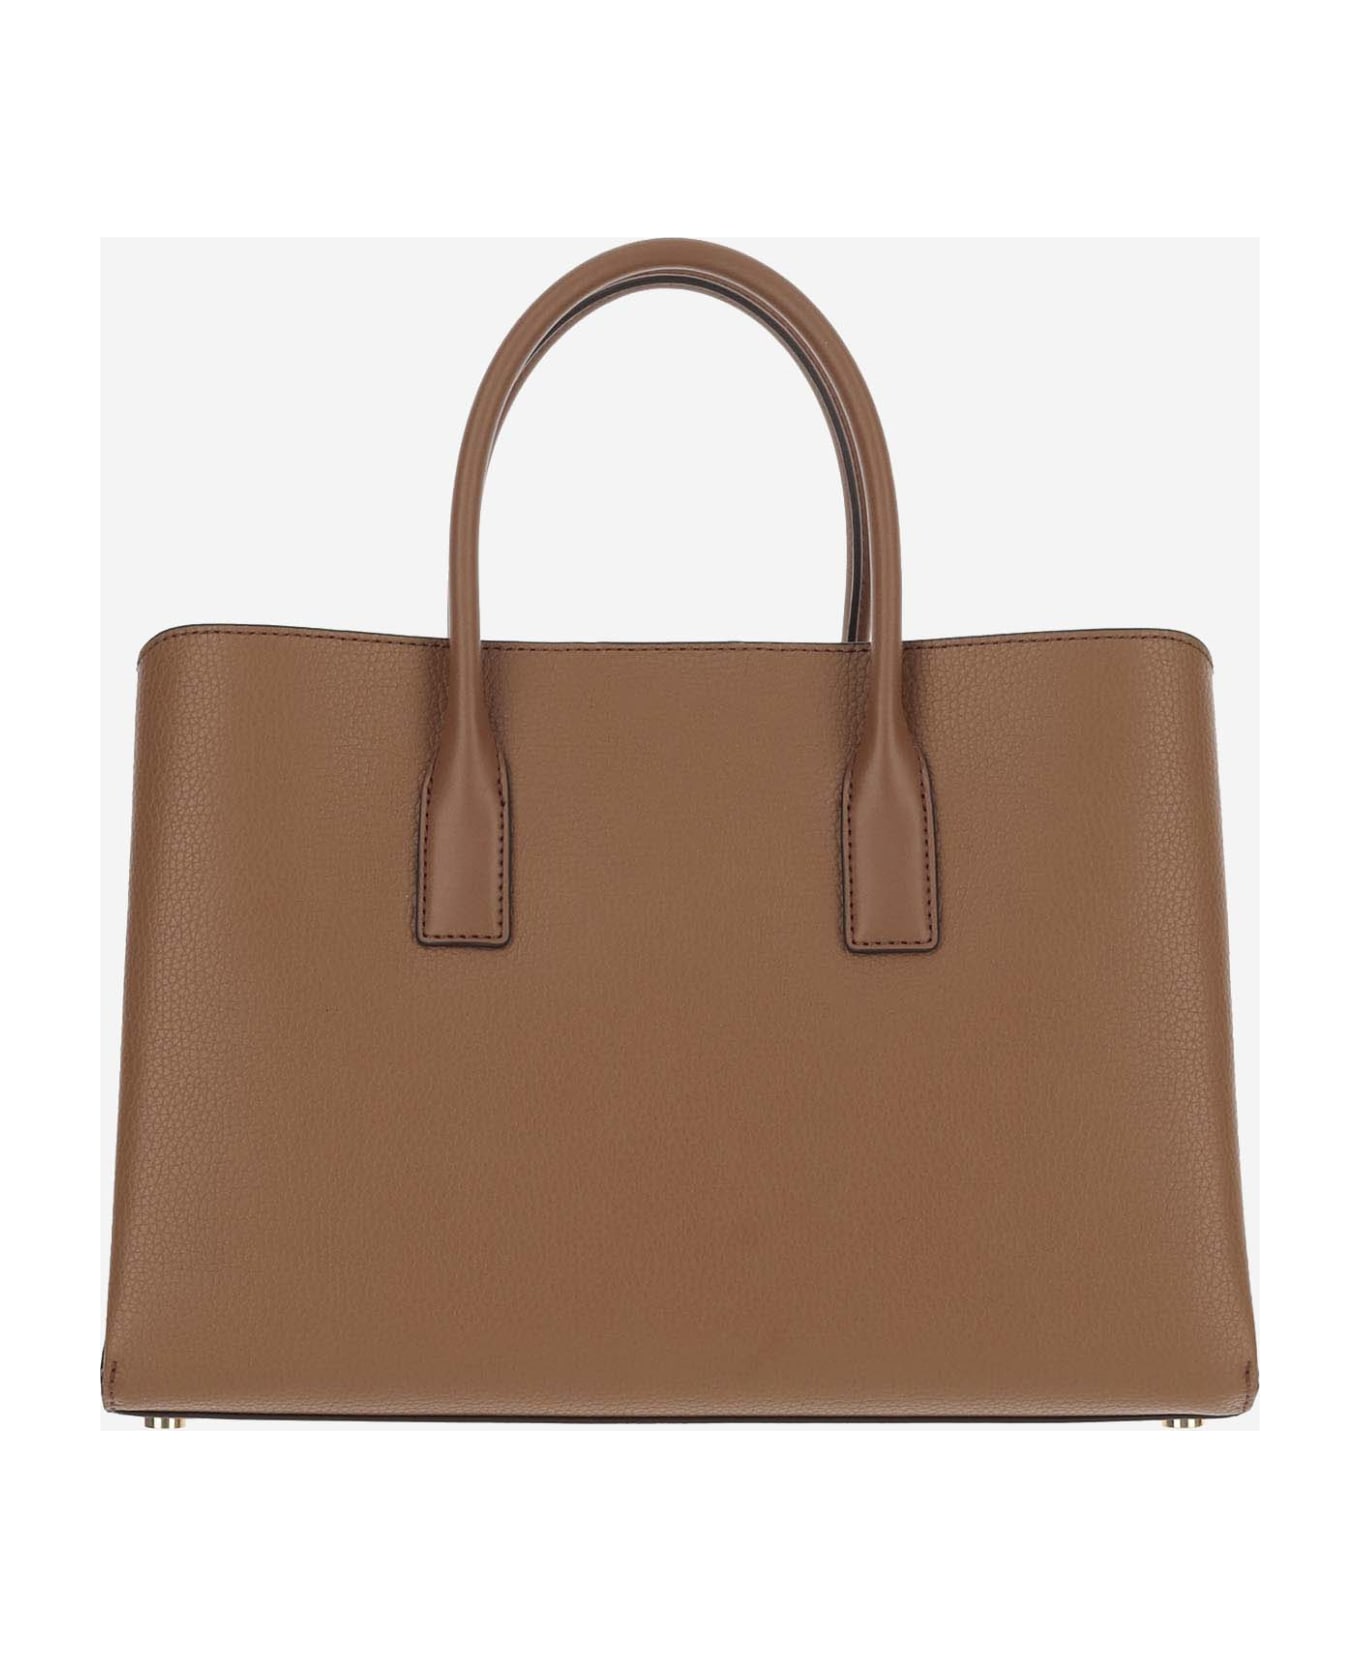 Michael Kors Ruthie Leather Handbag - Brown